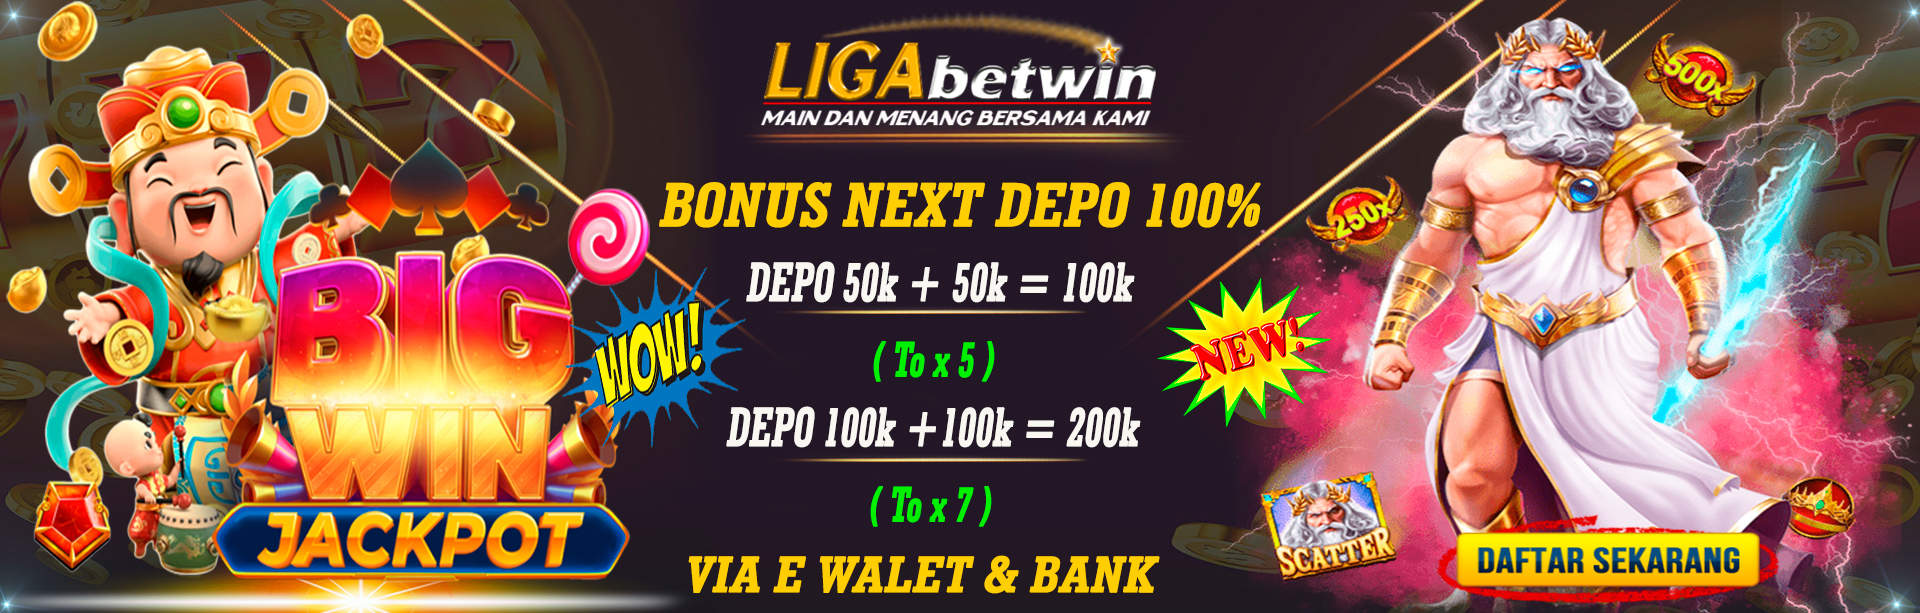 Bonus Deposit Harian Ligabetwin